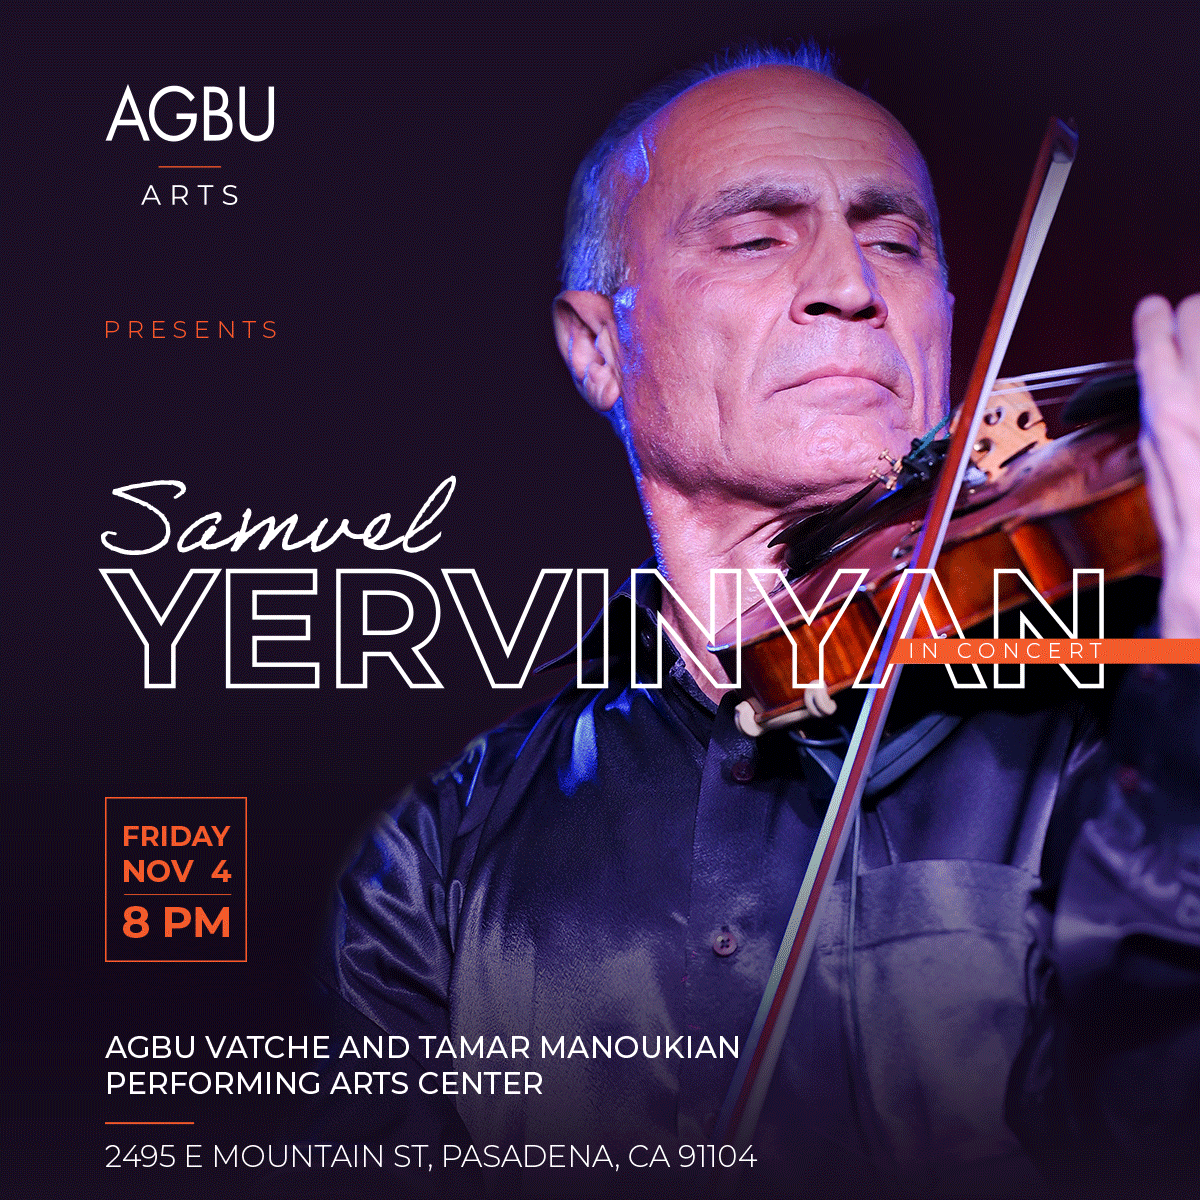 AGBU Arts Presents: Samvel Yervinyan in Concert